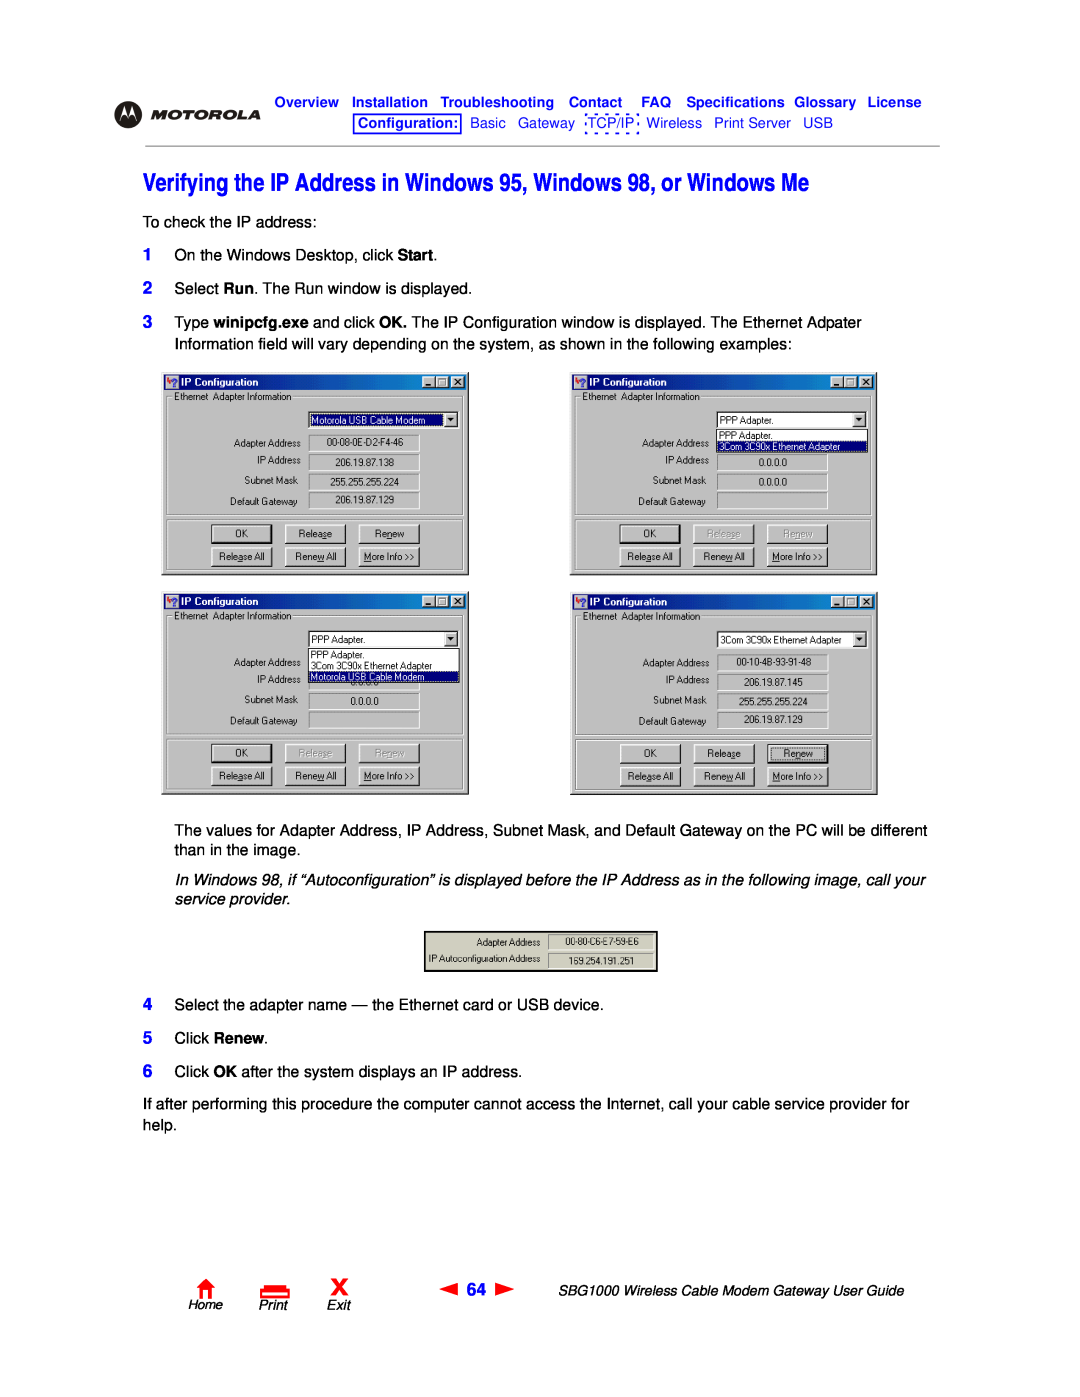 Motorola SBG1000 manual Verifying the IP Address in Windows 95, Windows 98, or Windows Me 